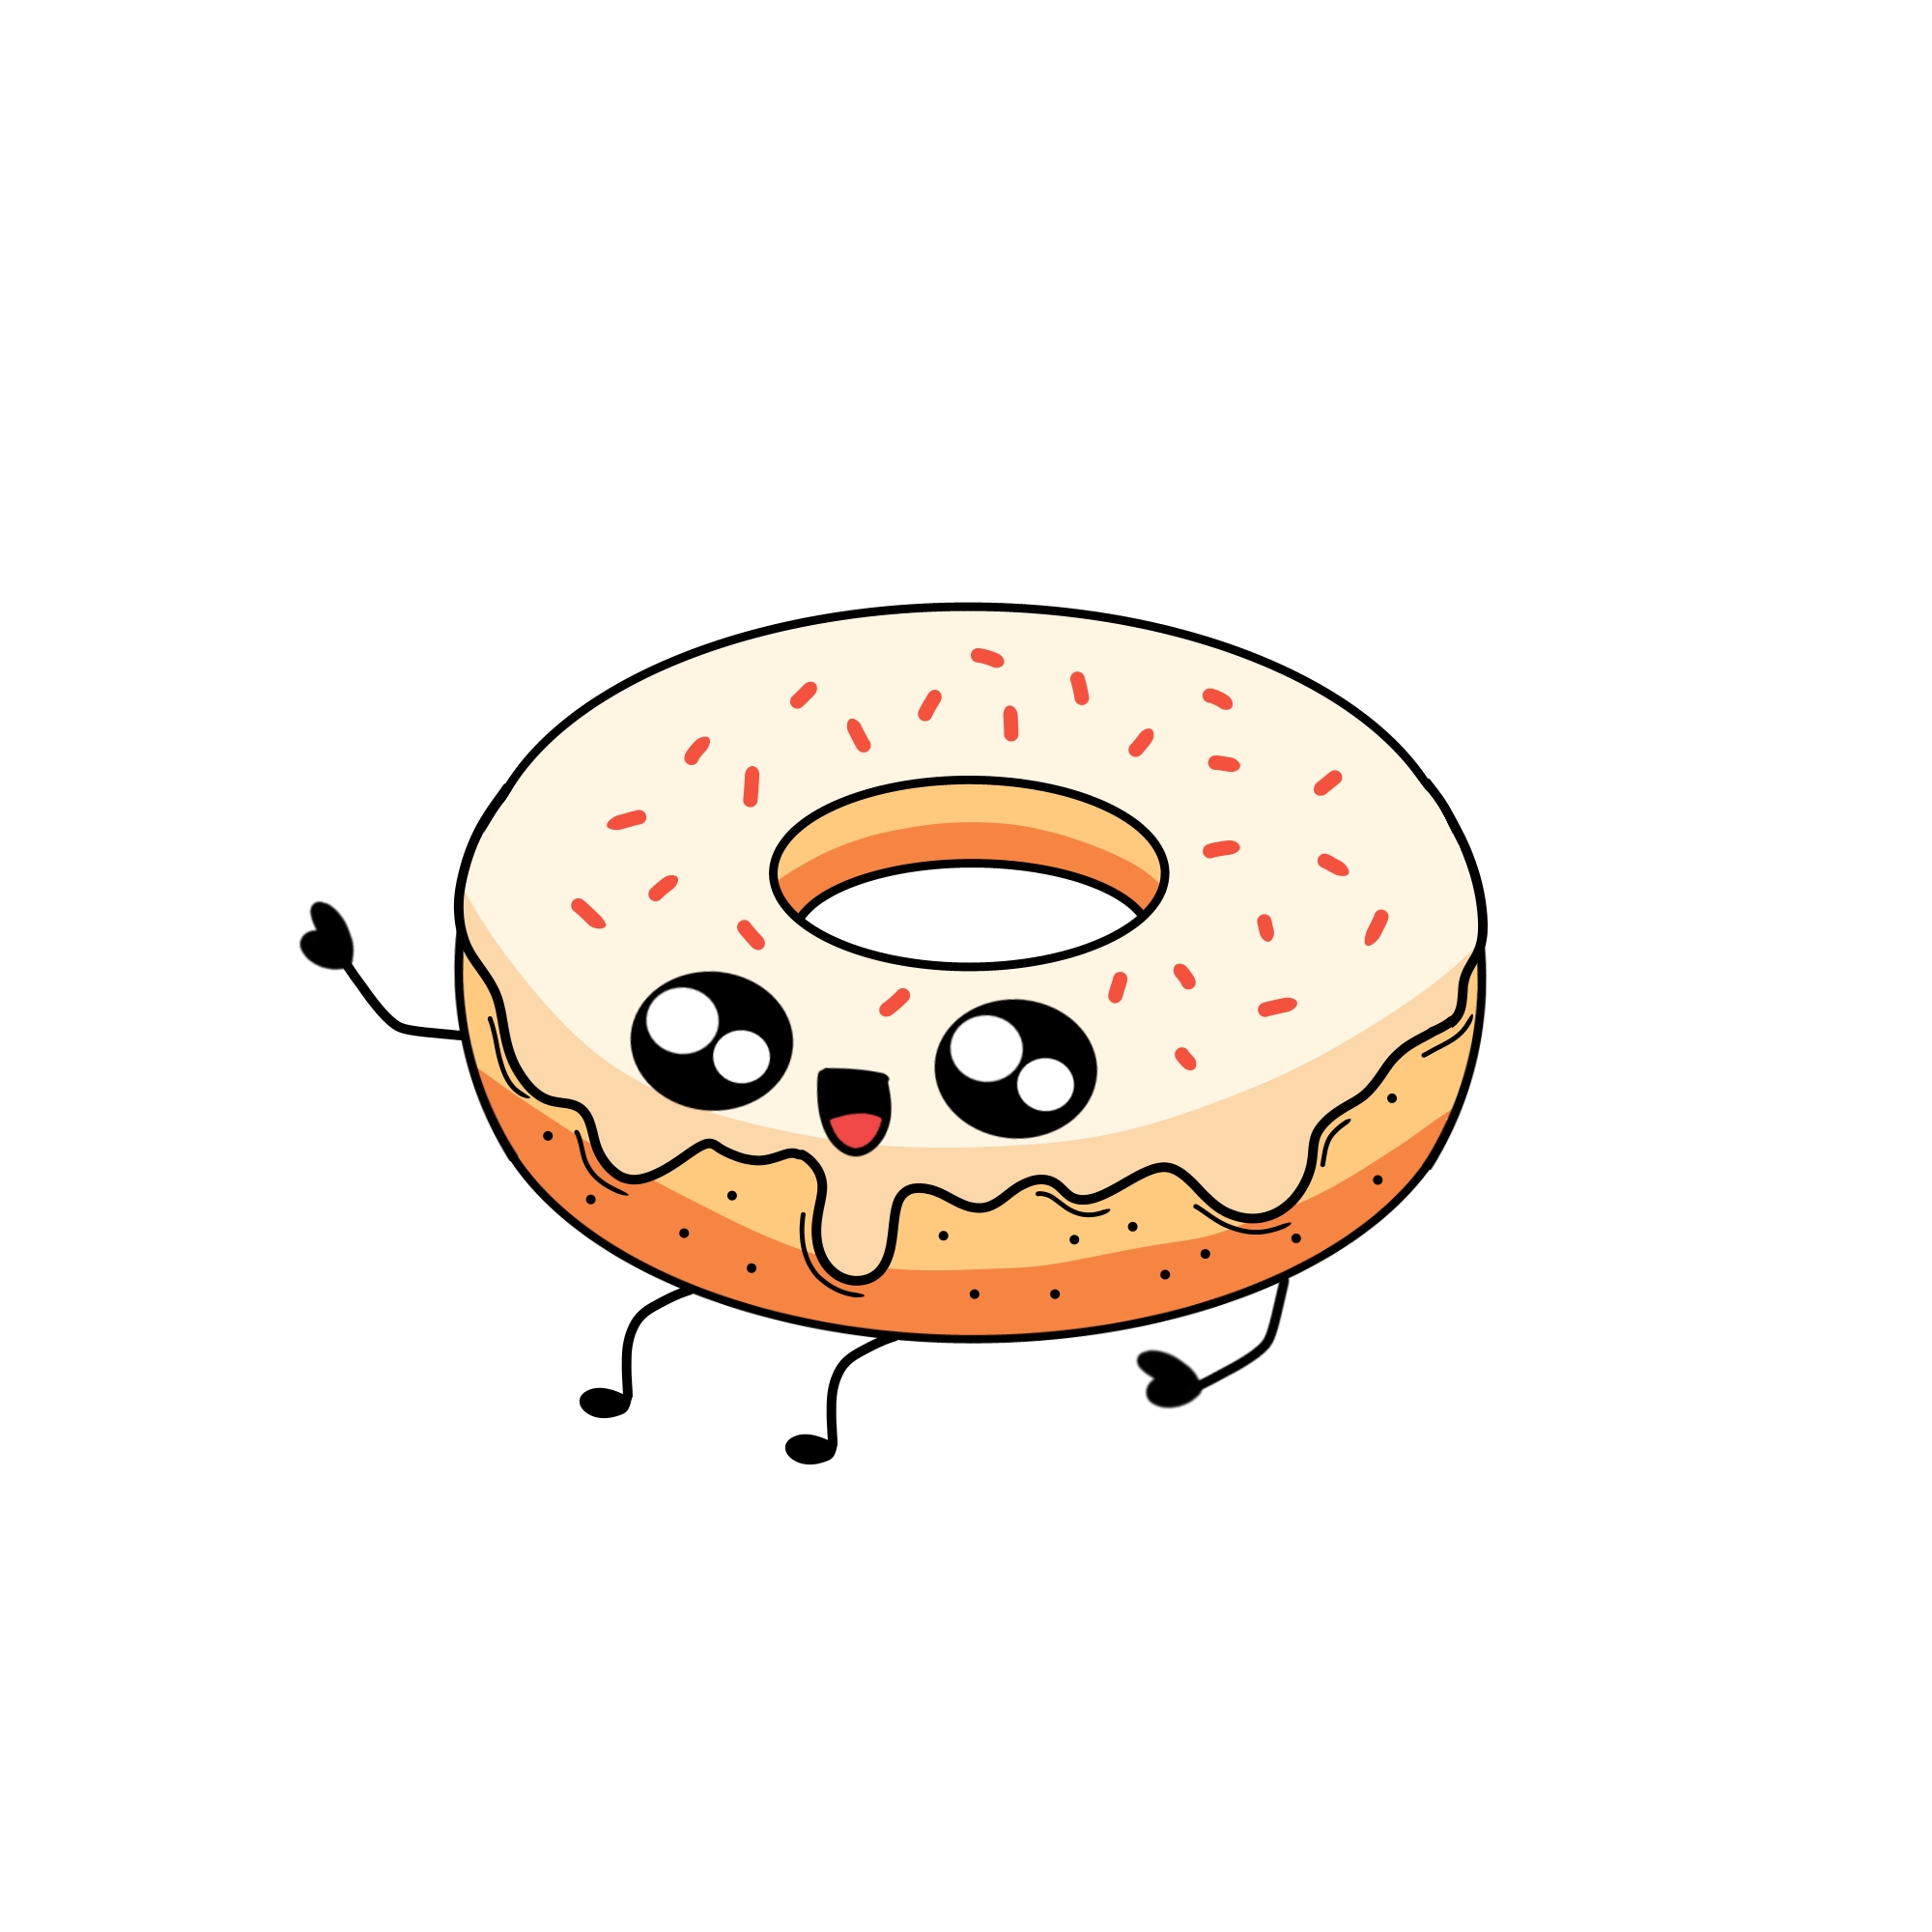 Cute Hand-drawn Kawaii Donut Pack.